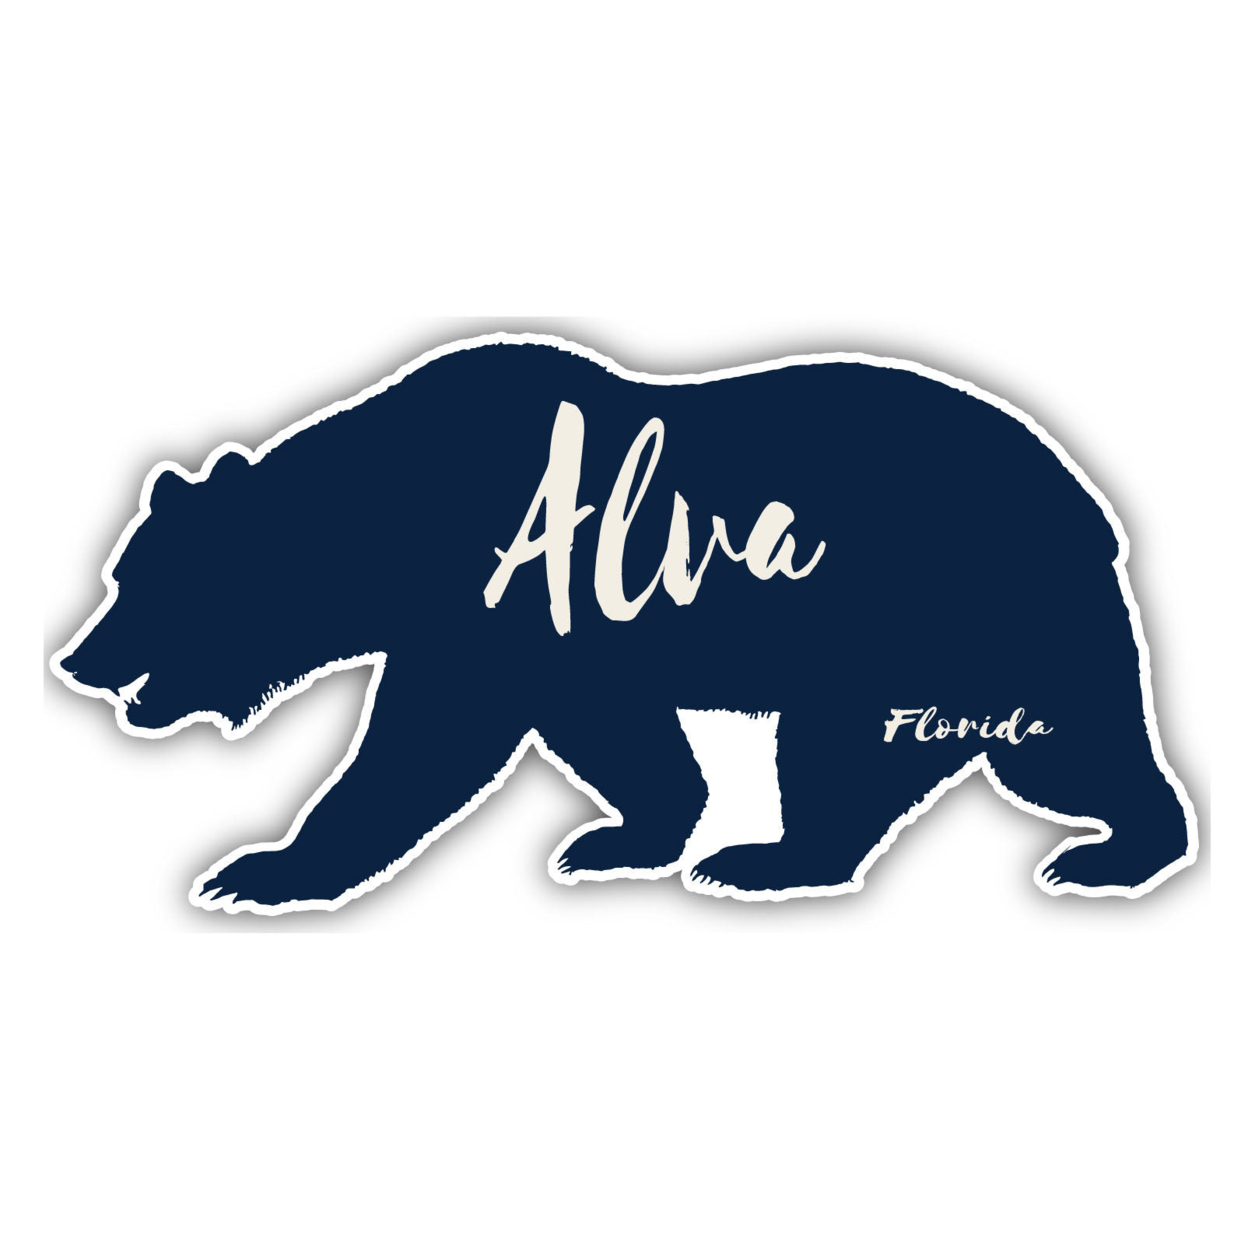 Alva Florida Souvenir Decorative Stickers (Choose Theme And Size) - Single Unit, 6-Inch, Bear